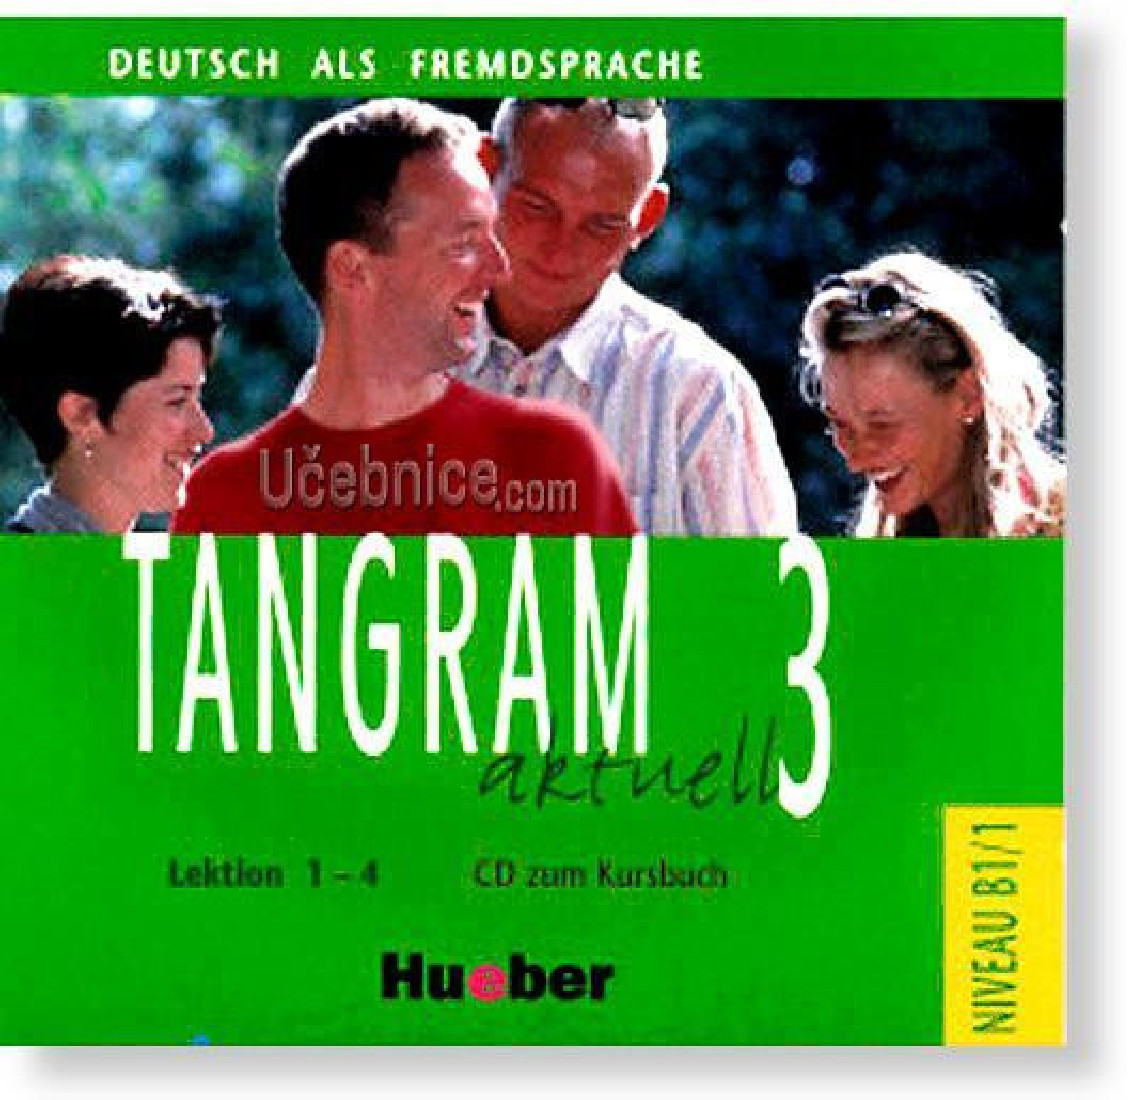 TANGRAM AKTUELL 3 CD (1) LEKTION 1-4